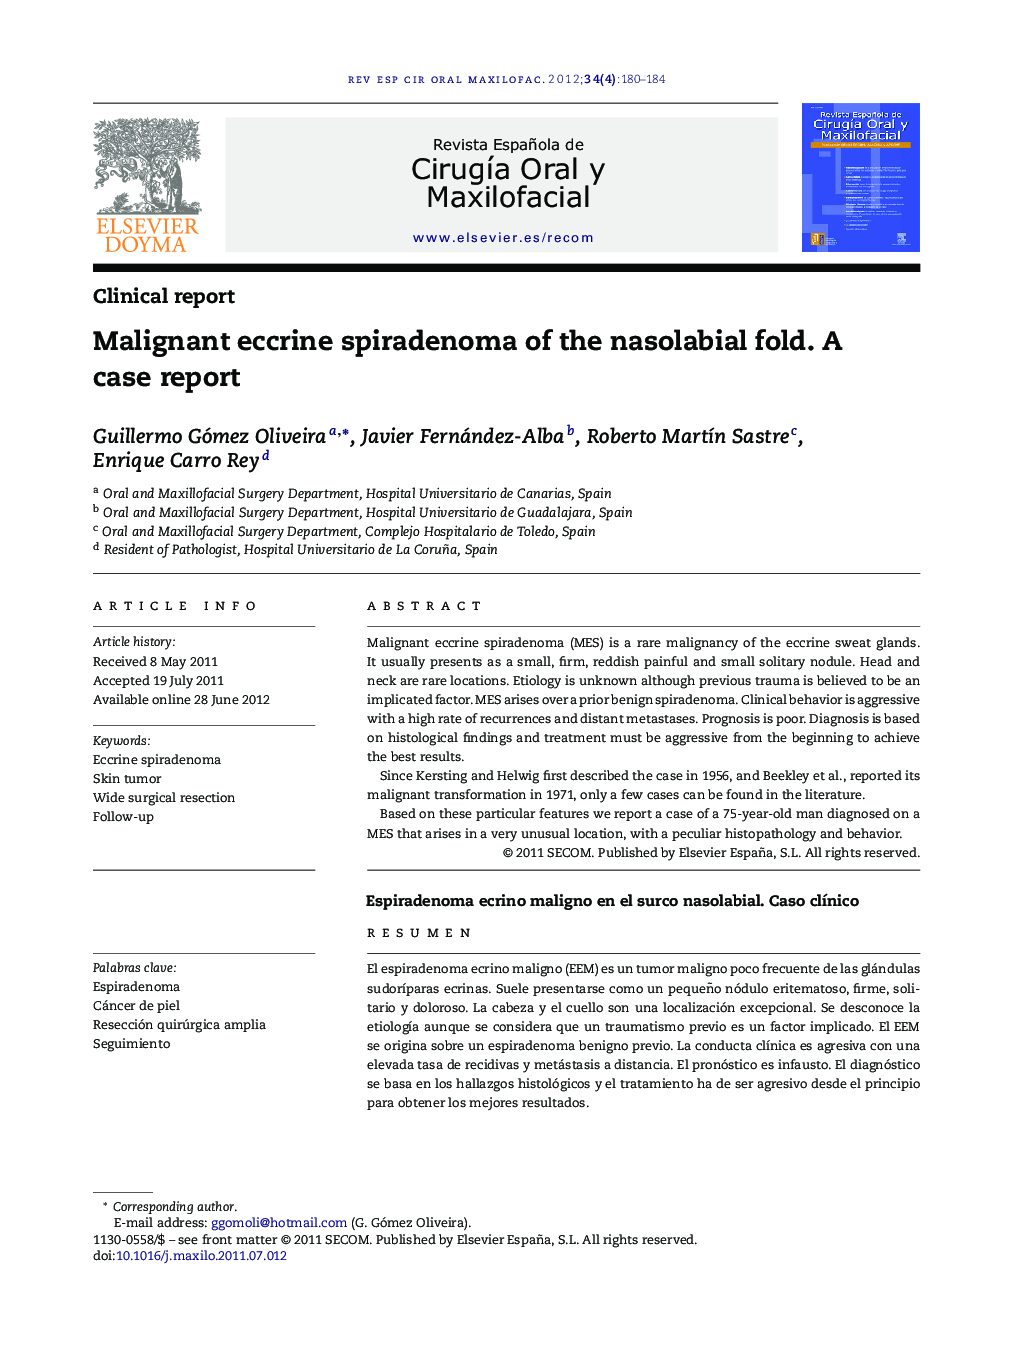 Malignant eccrine spiradenoma of the nasolabial fold. A case report